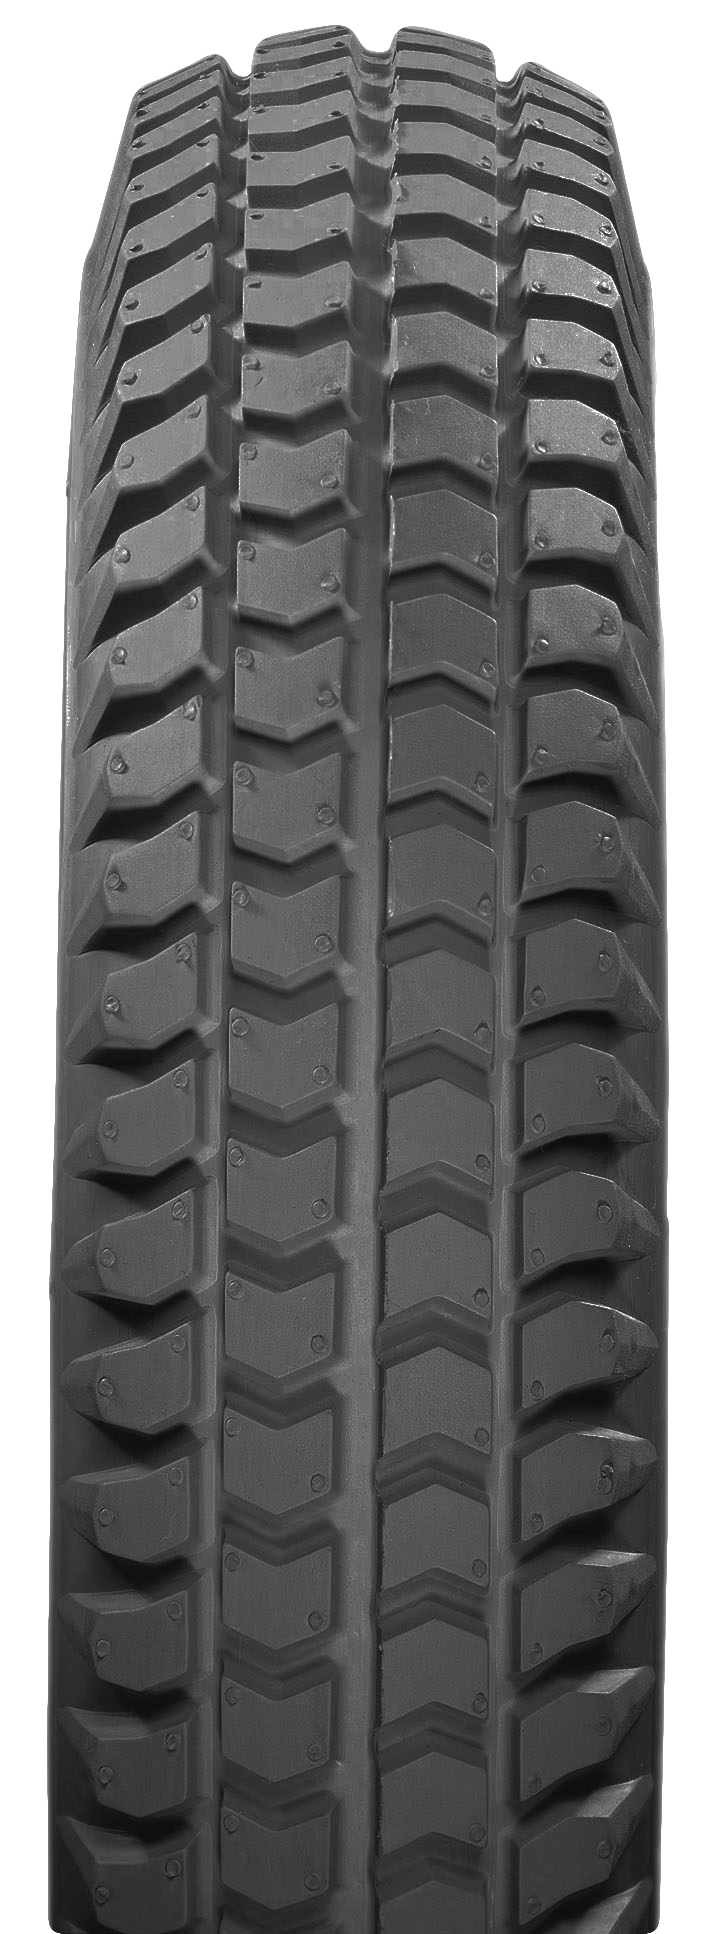 Tire 3.00-4" (10x3) 260x85 mm  Black All Weather